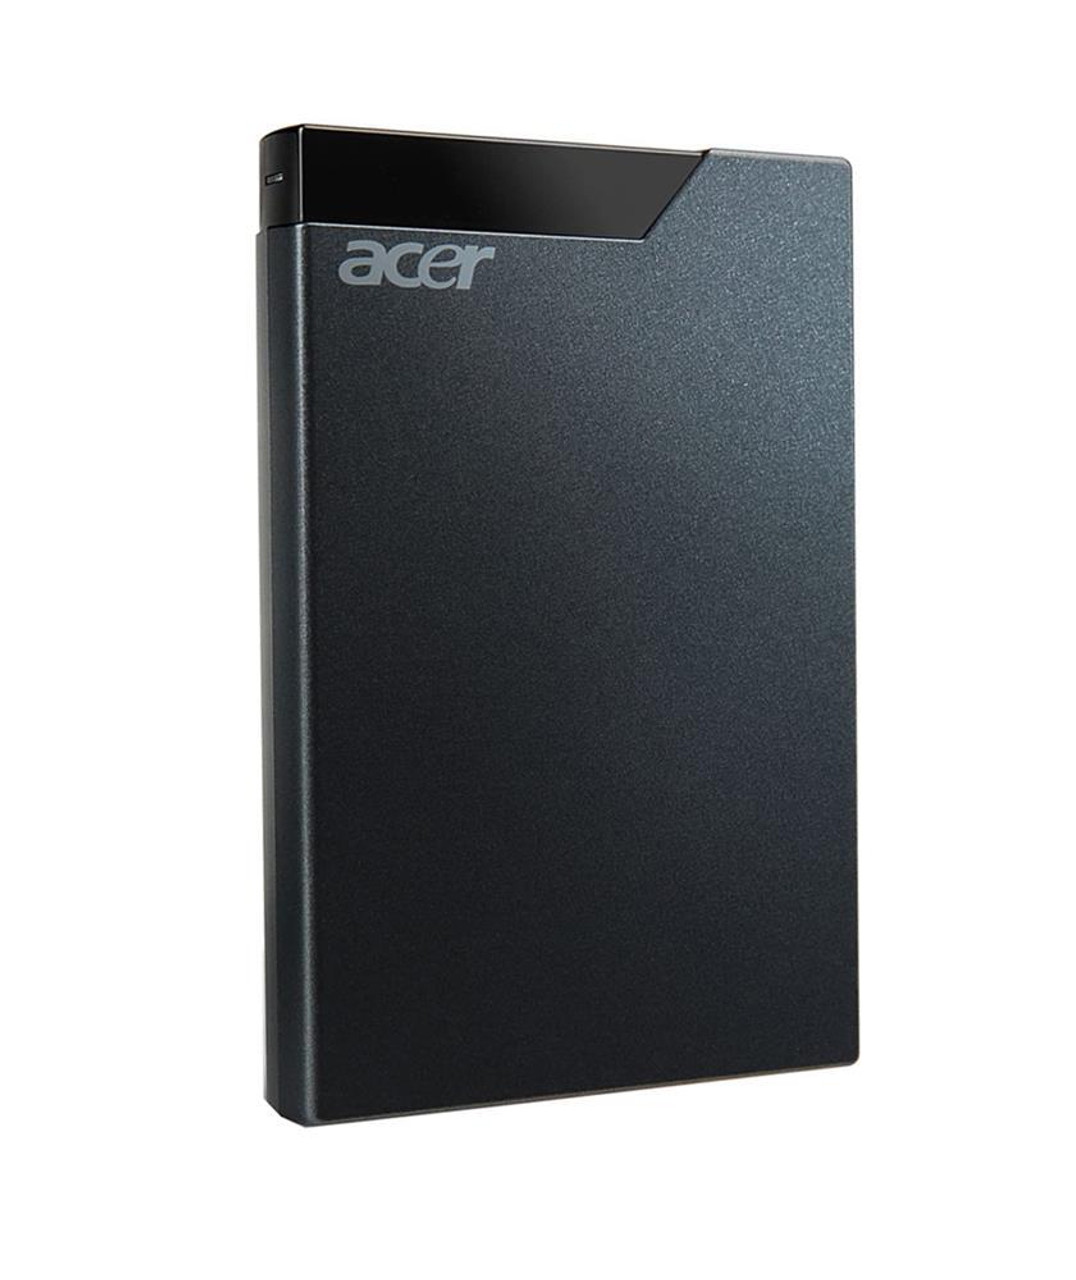 Acer AH033S 1 TB Hard Drive - 3.5" External - SATA -  MFR P/N LC.EXH0A.045